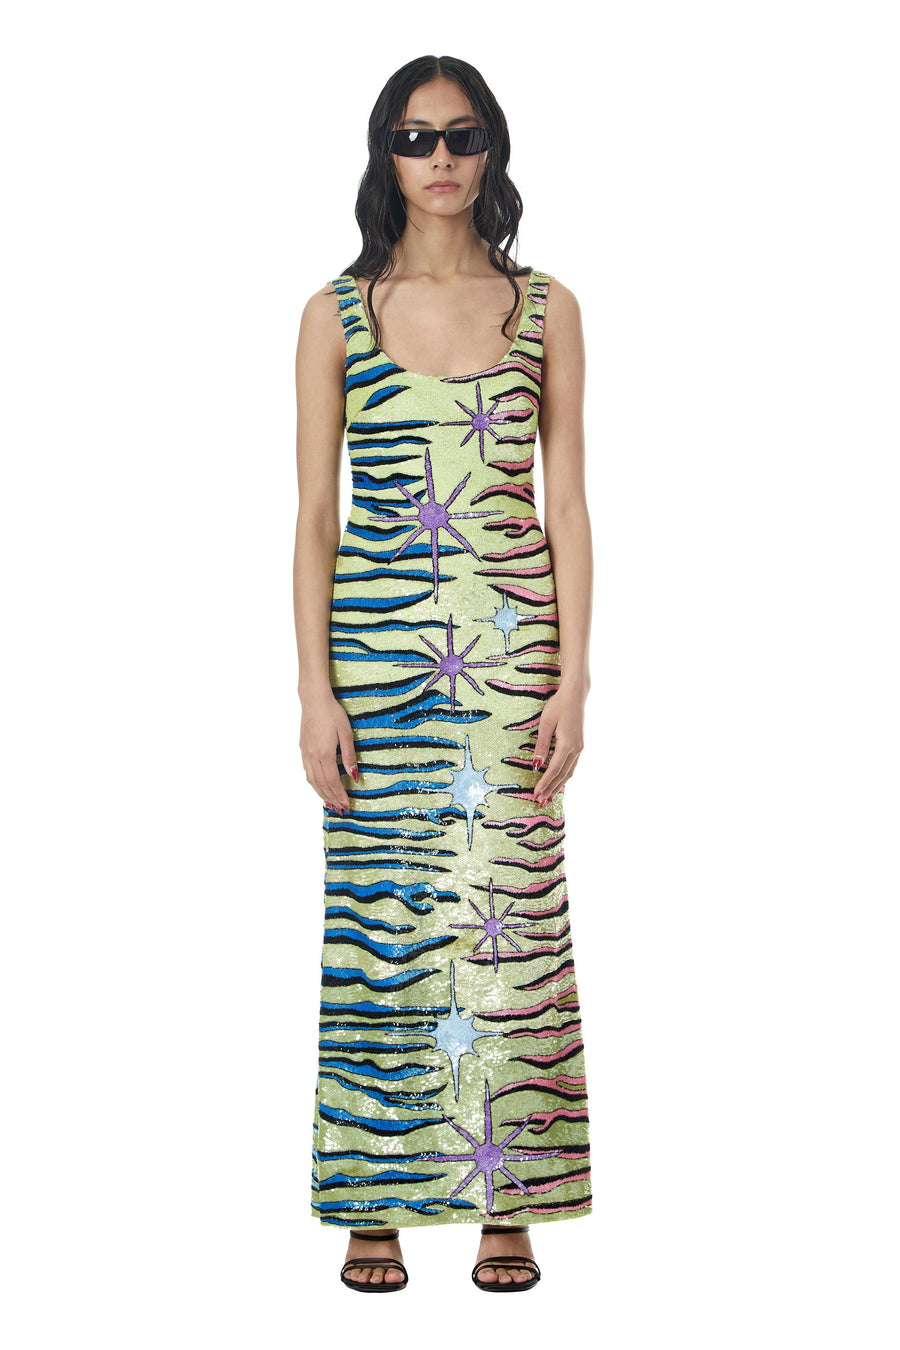 'Wild Odyssey' Embellished Dress - Kanika Goyal Label